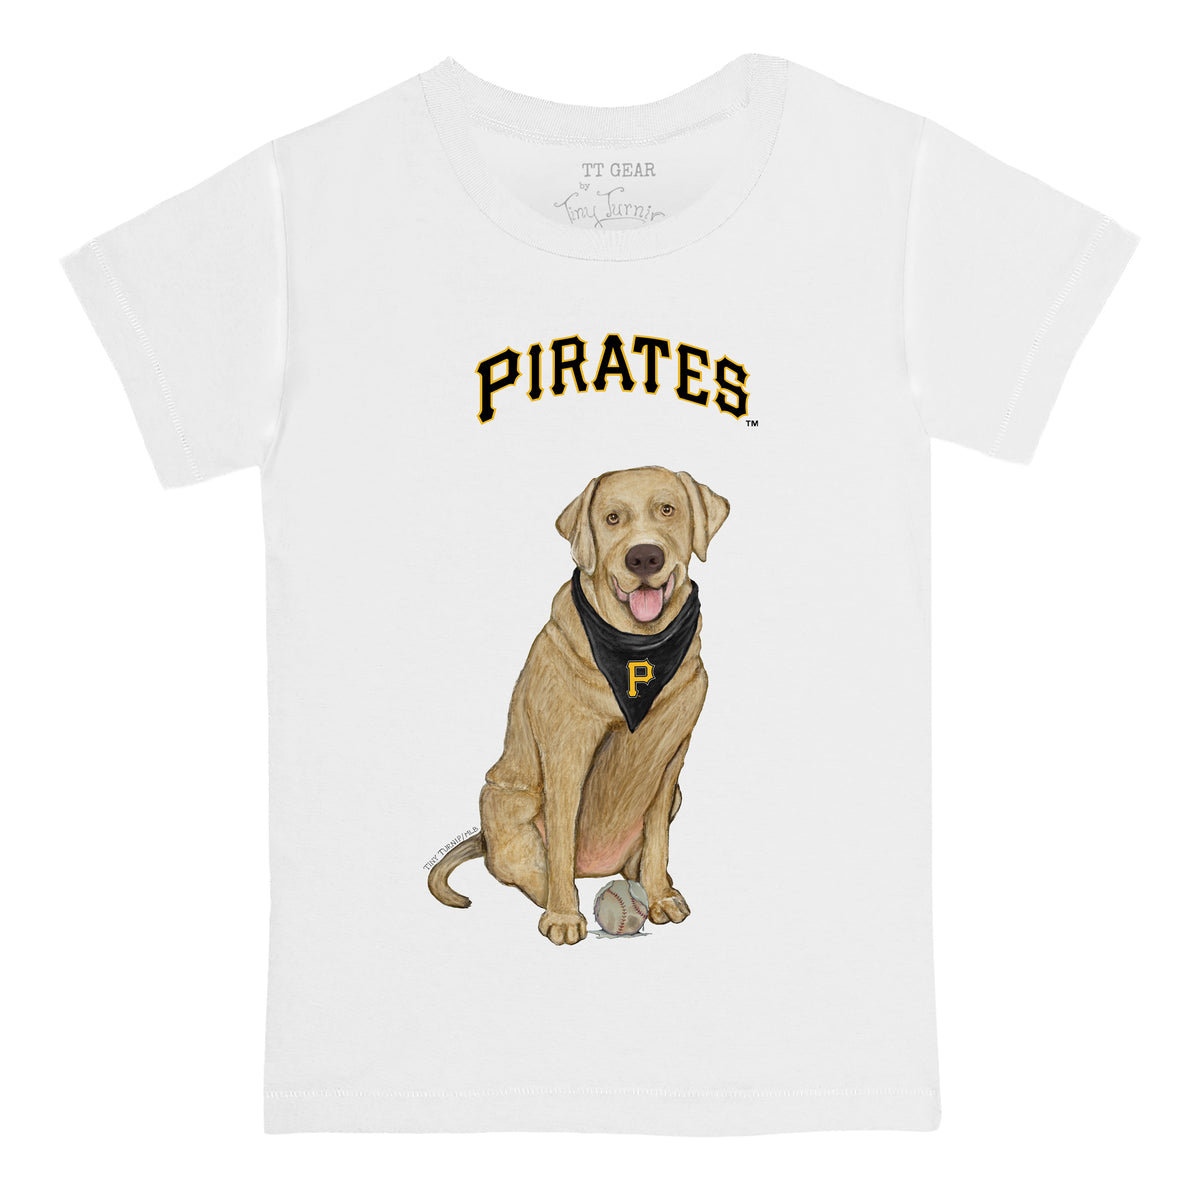 Pittsburgh Pirates Yellow Labrador Retriever Tee Shirt